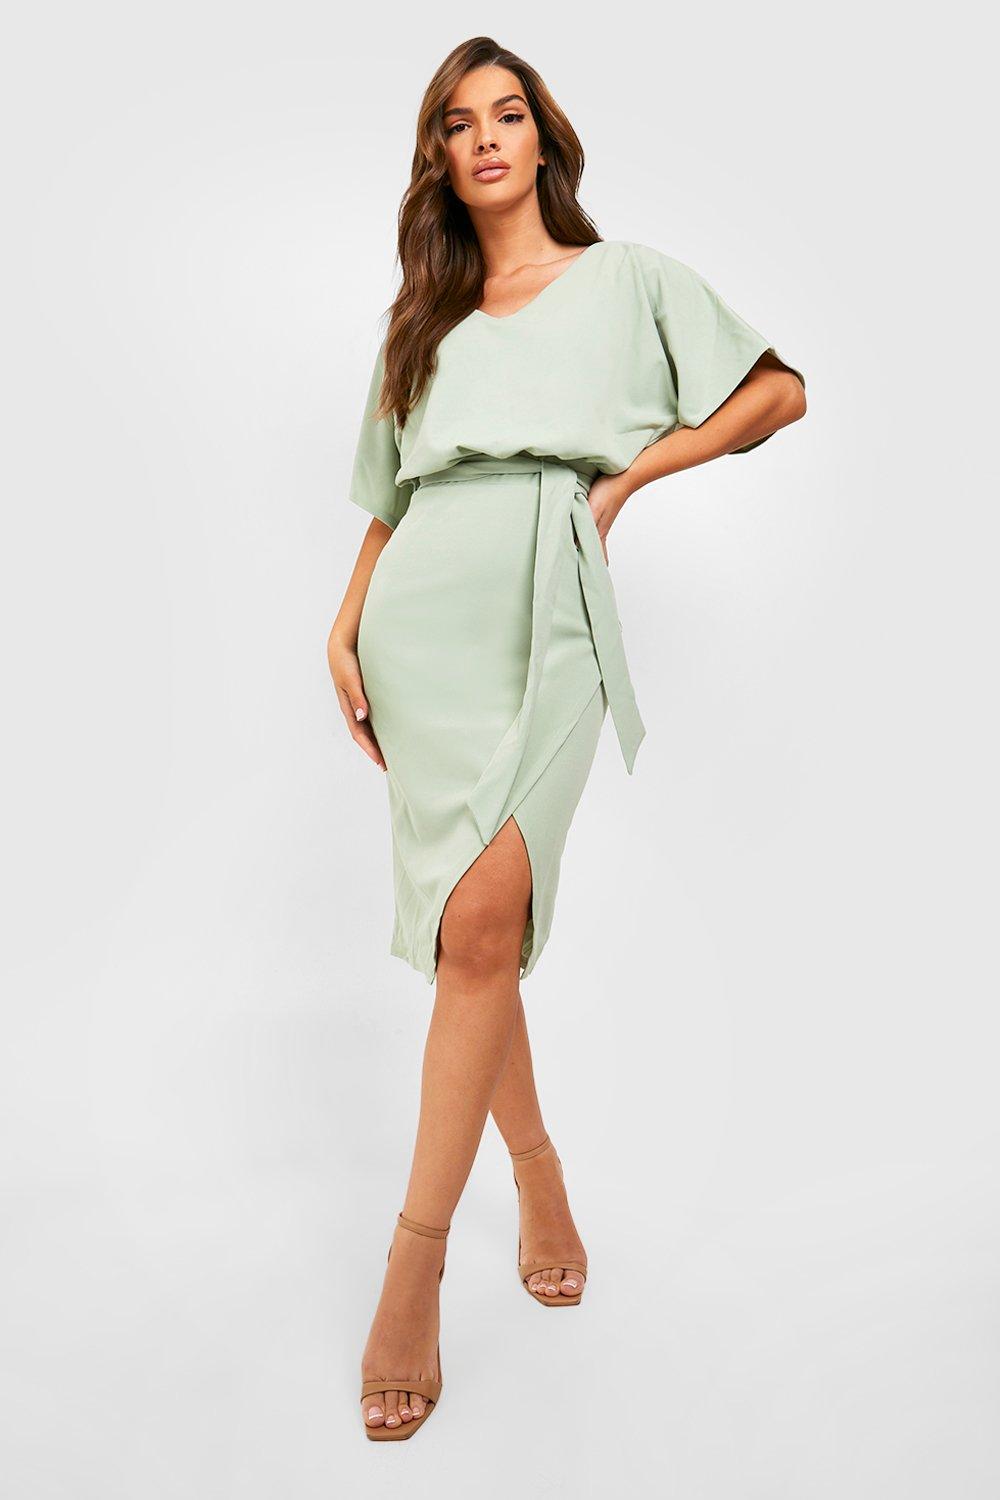 Green Dresses | Emerald, Khaki ☀ Mint ...